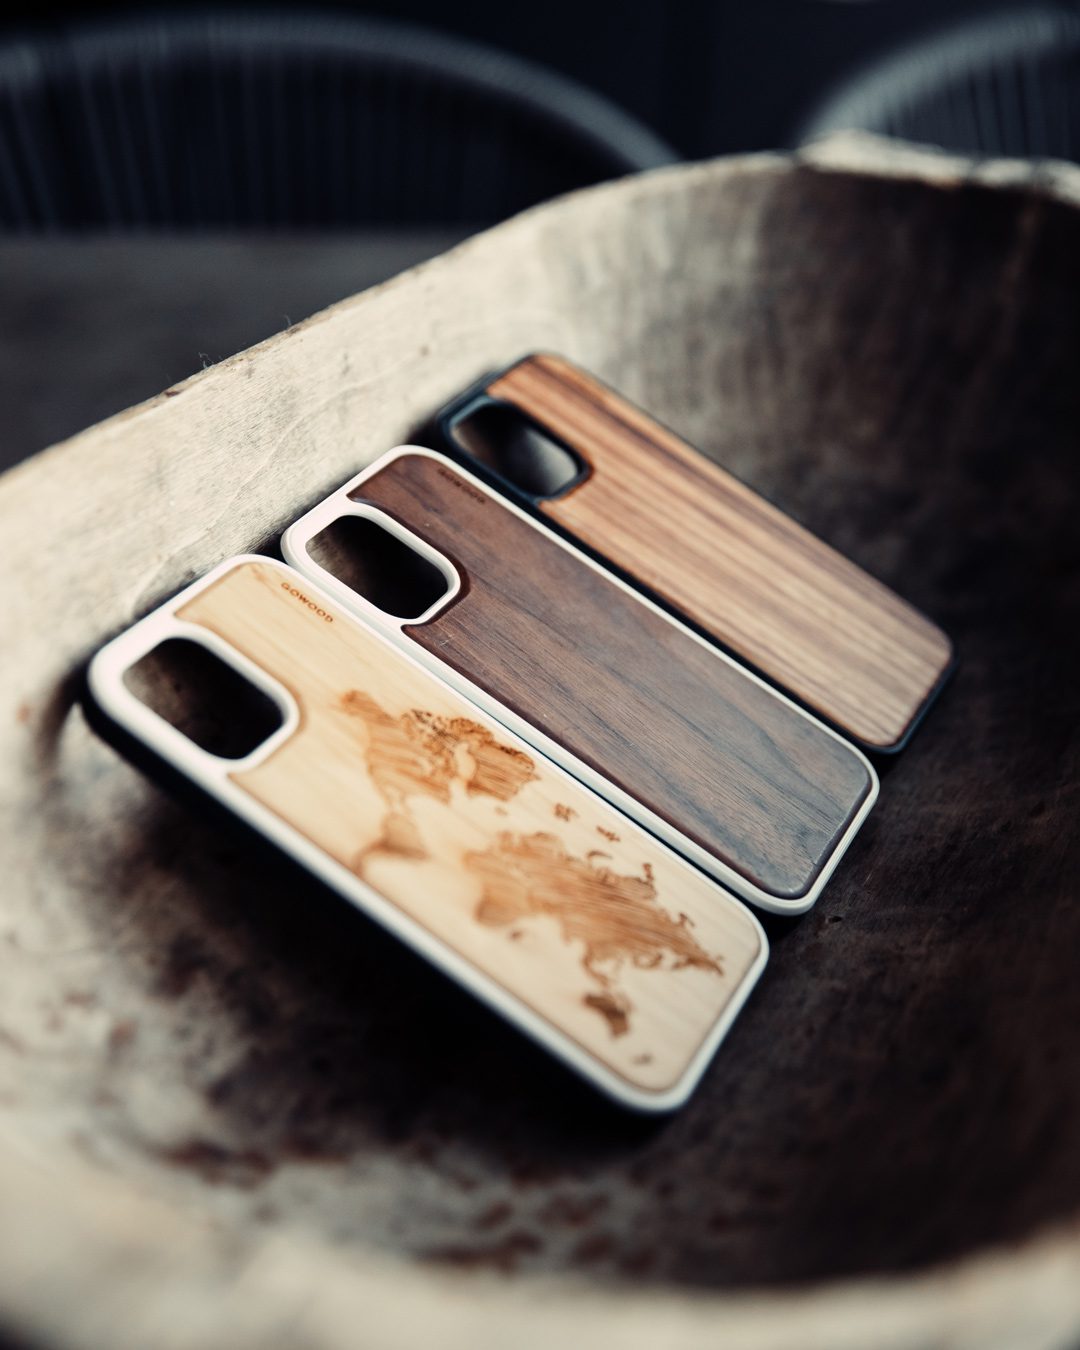 Wood phone cases